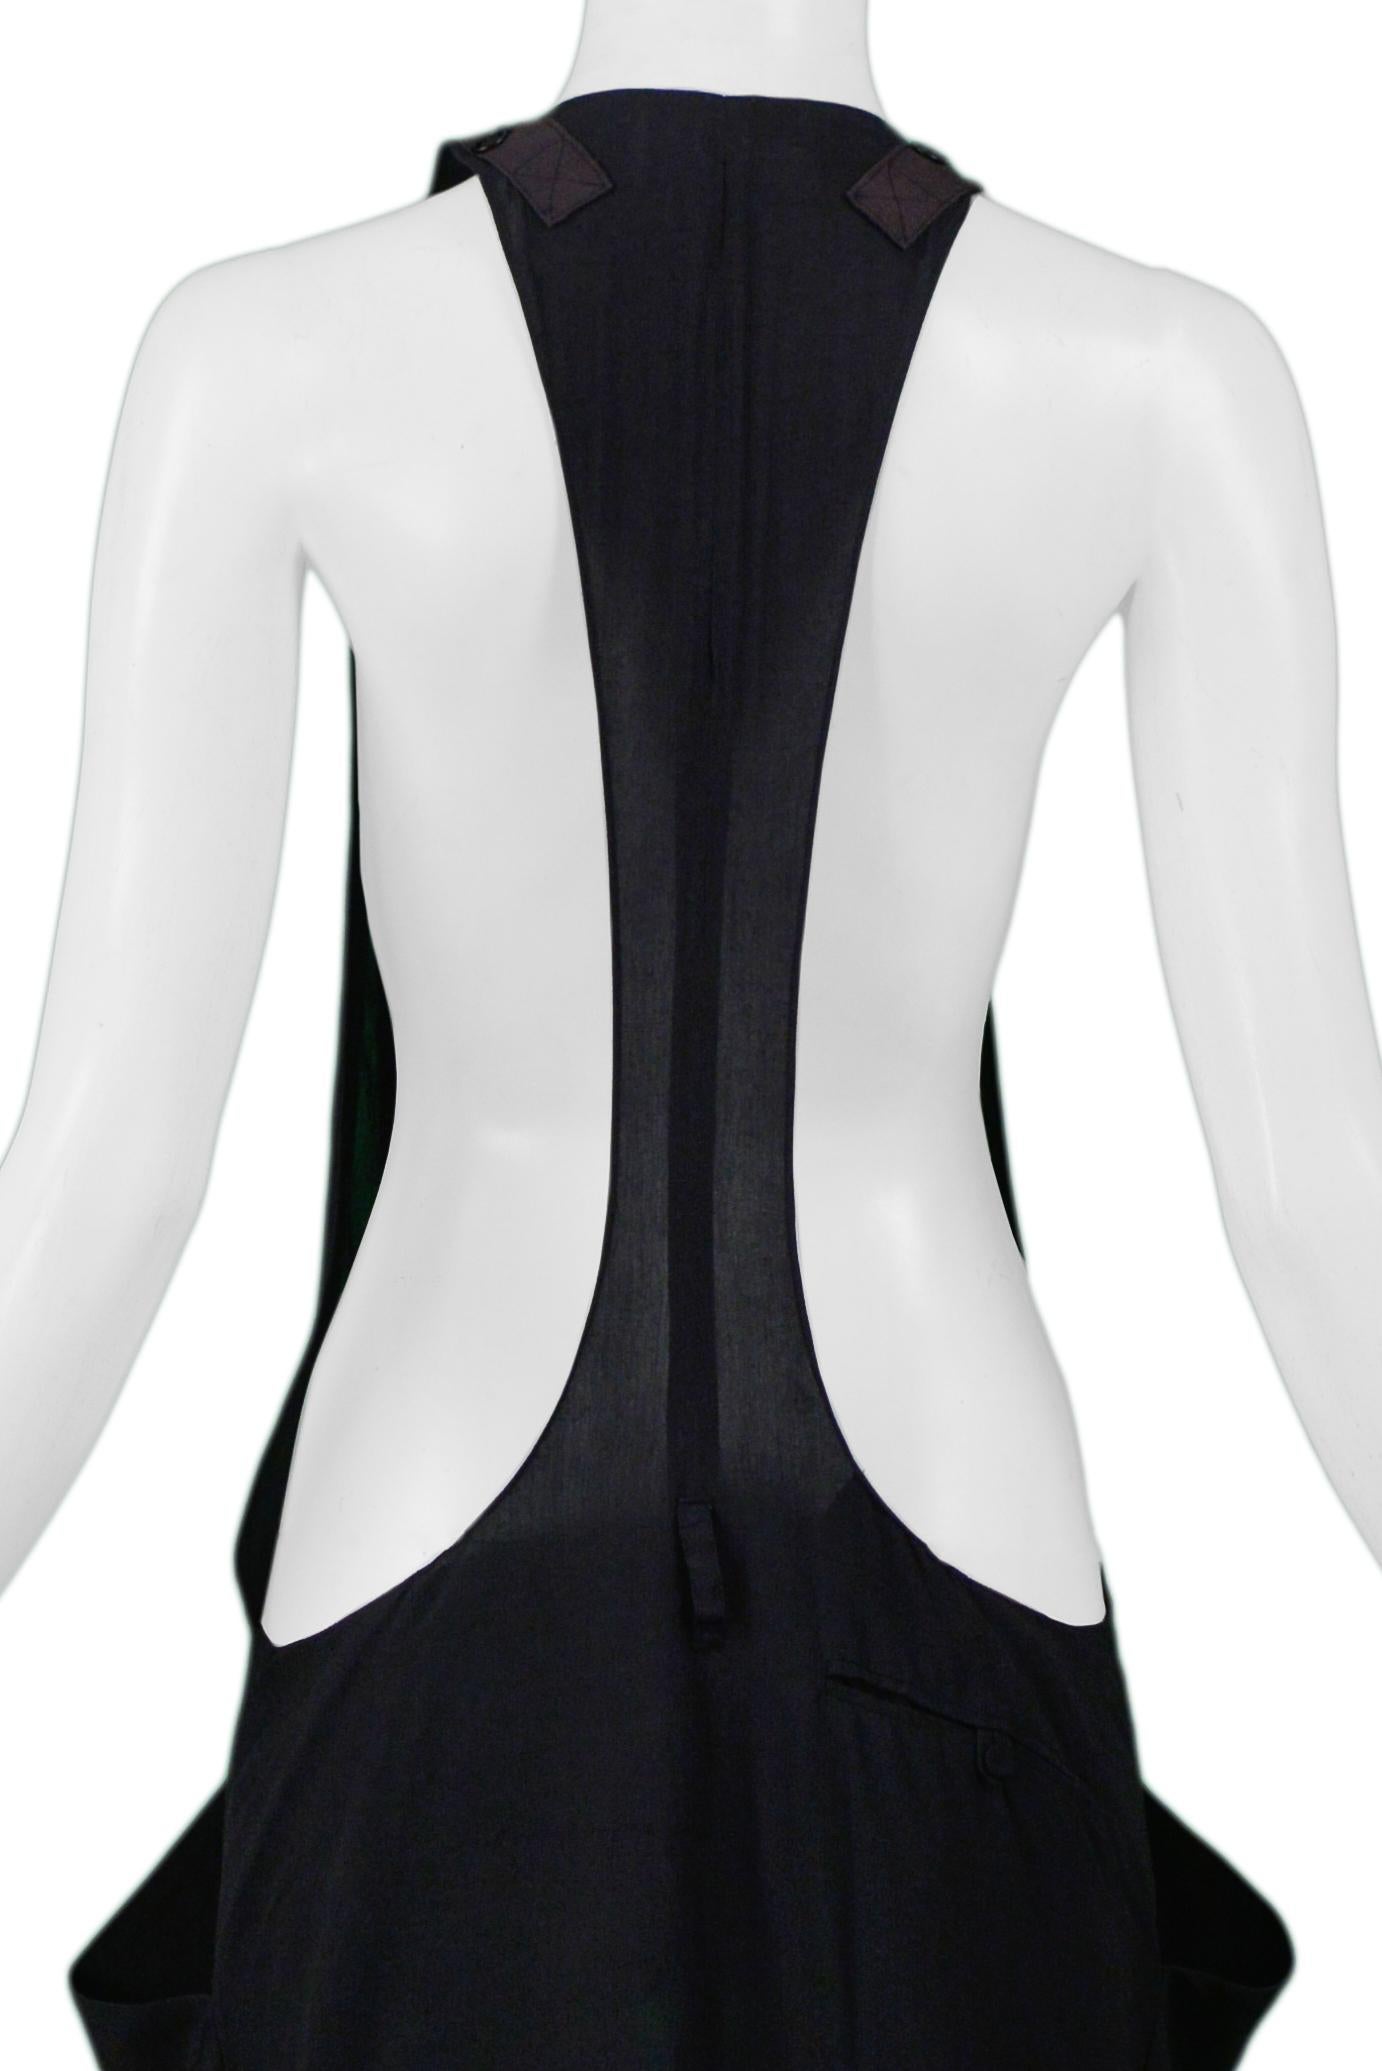 Women's Rare & Iconic Balenciaga by Nicolas Ghesquiere Corset Vest Top 2002 For Sale